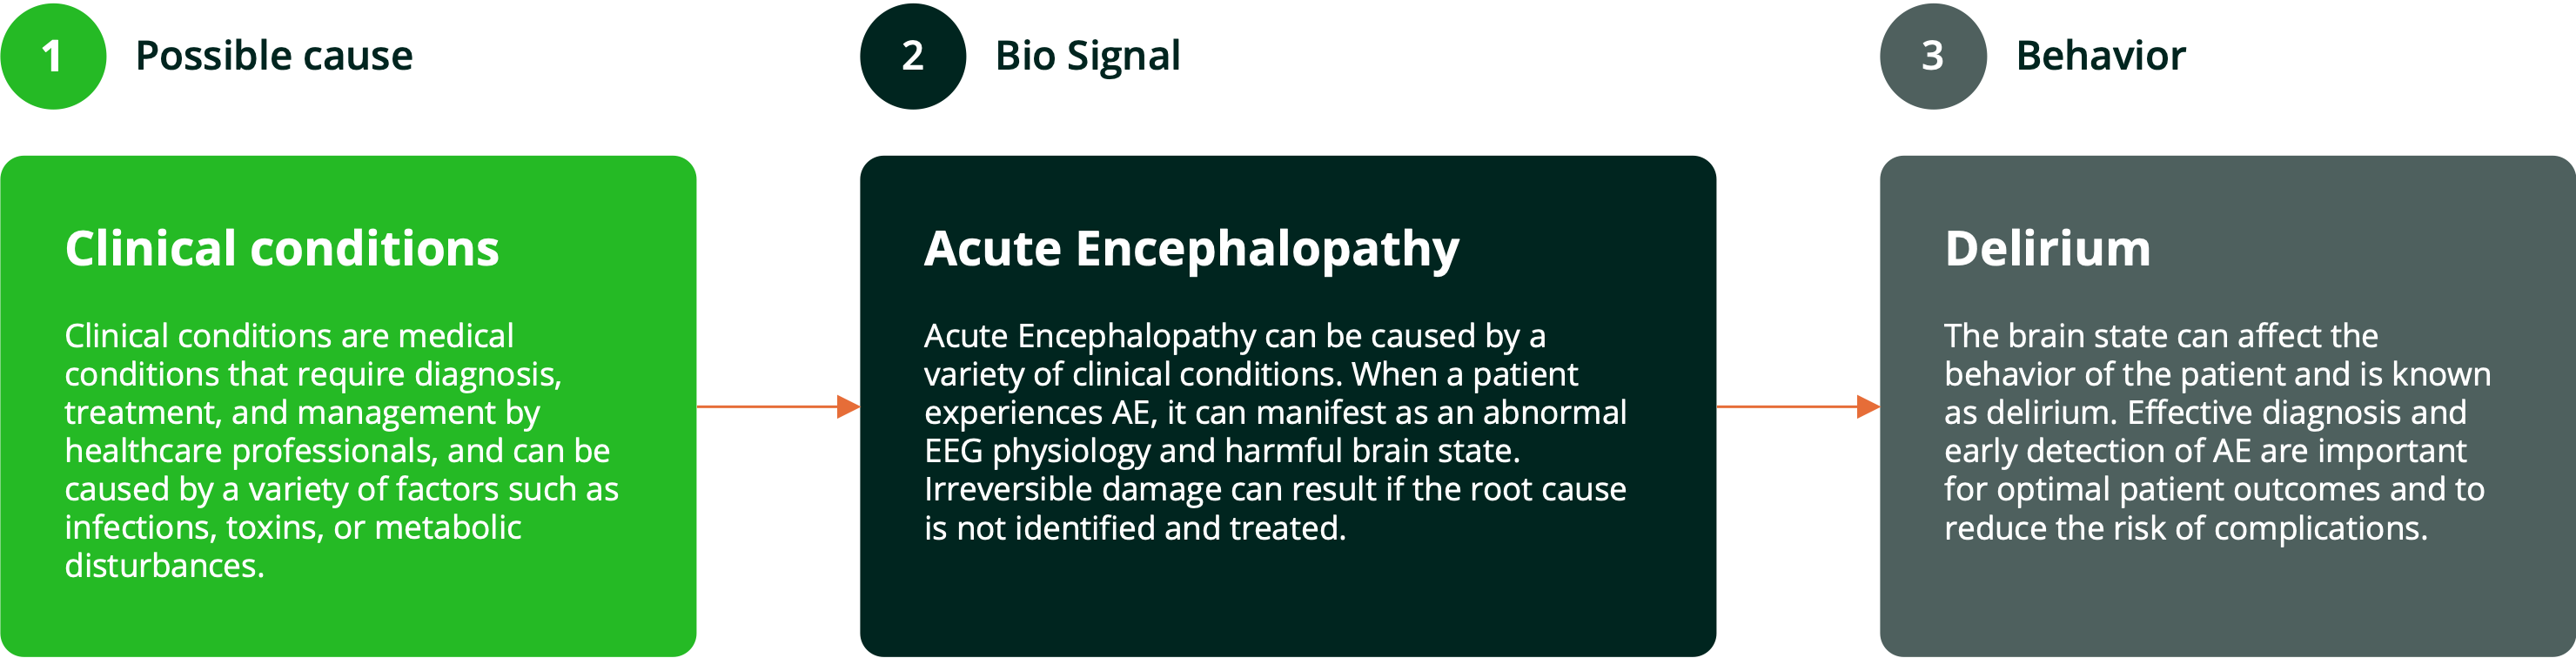 Acute encephalopathy and delirium